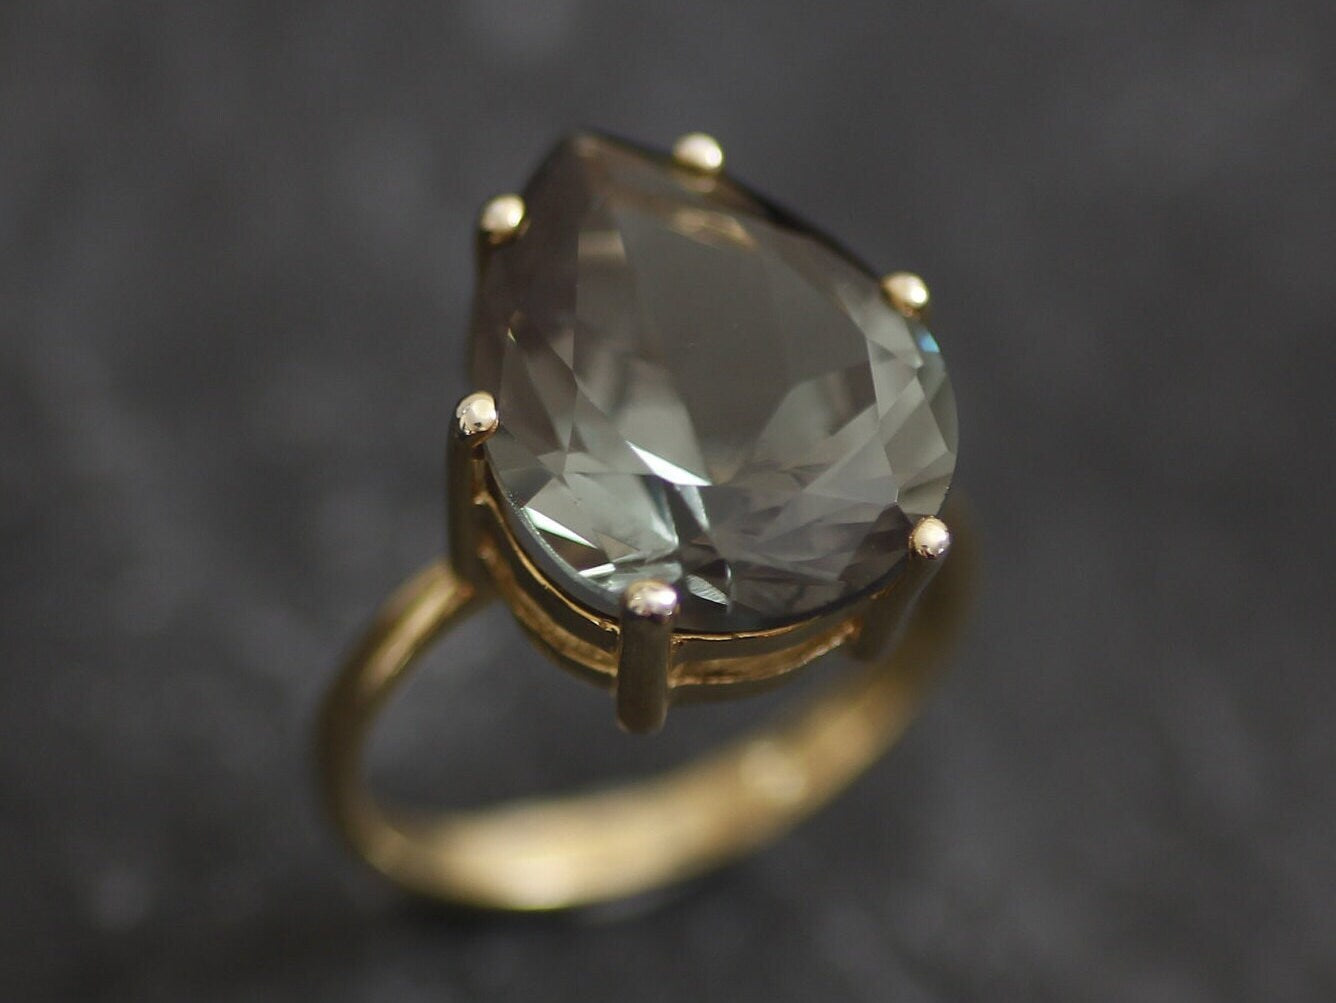 Large Teardrop Green Diamond Ring in Gold Vermeil